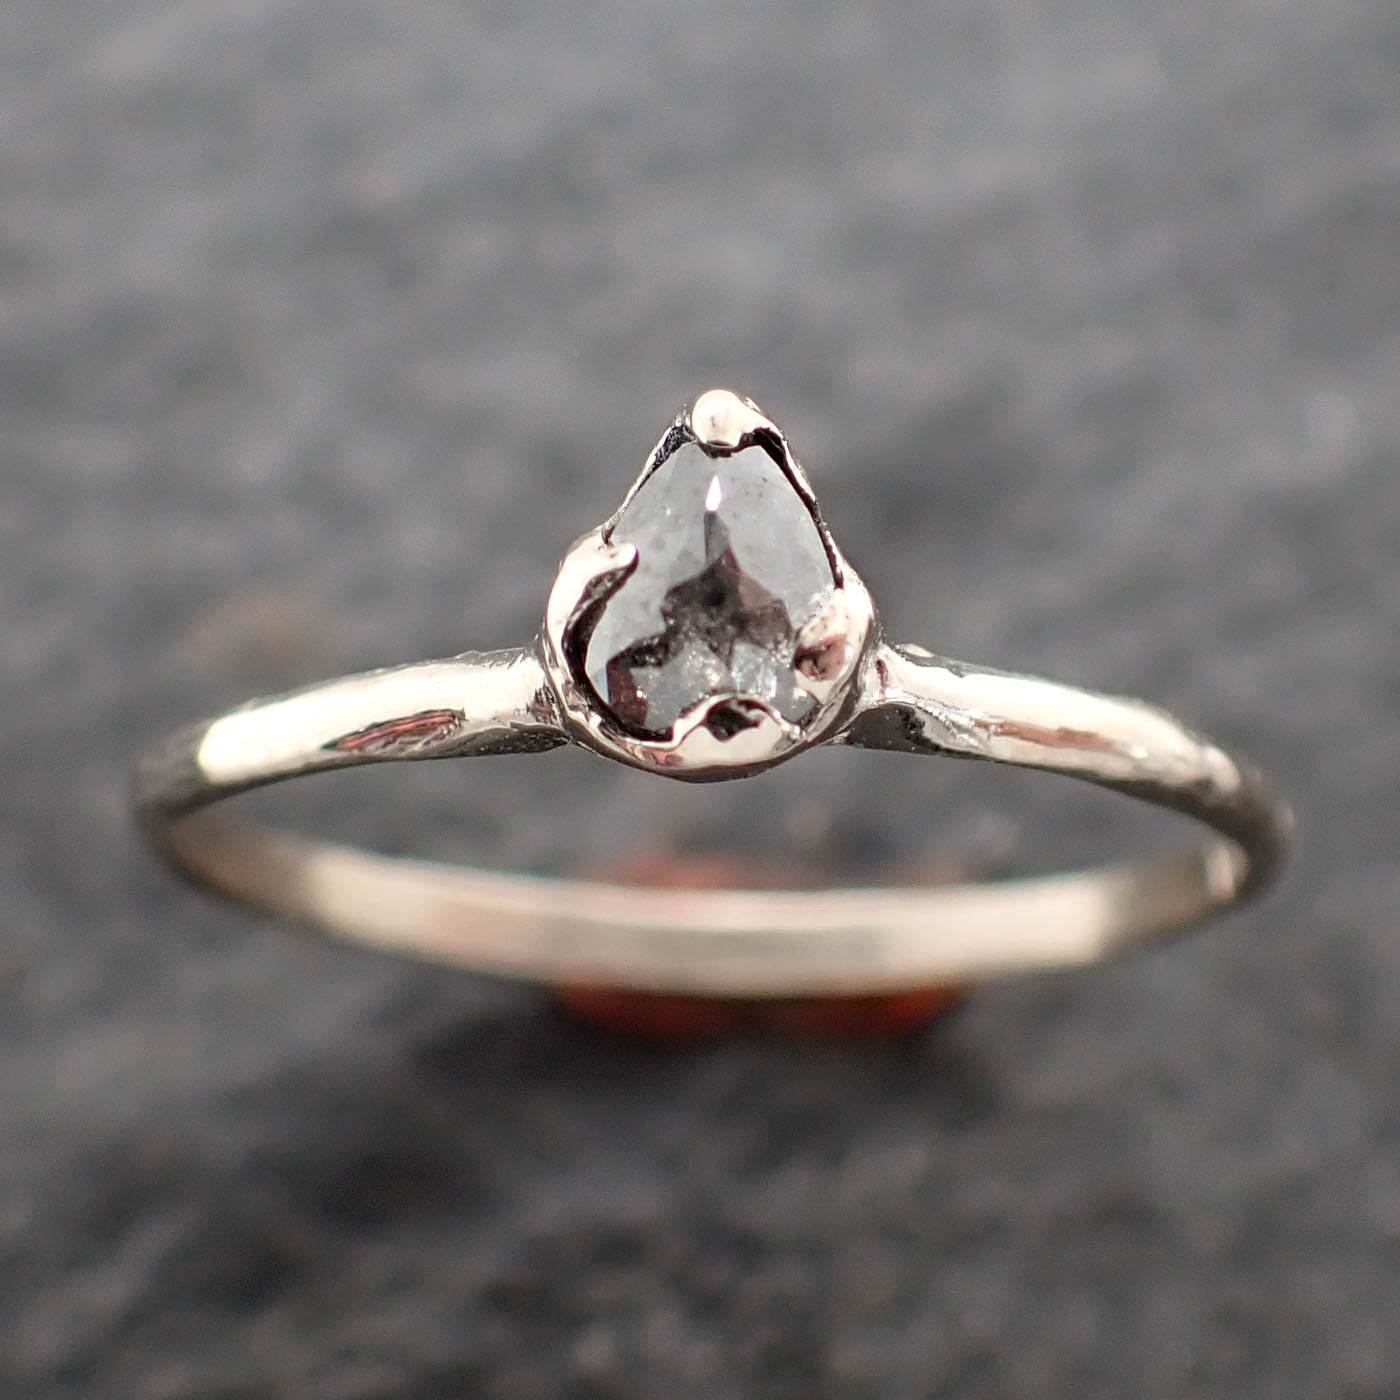 fancy cut salt and pepper diamond solitaire engagement 14k white gold wedding ring diamond ring byangeline 2720 Alternative Engagement